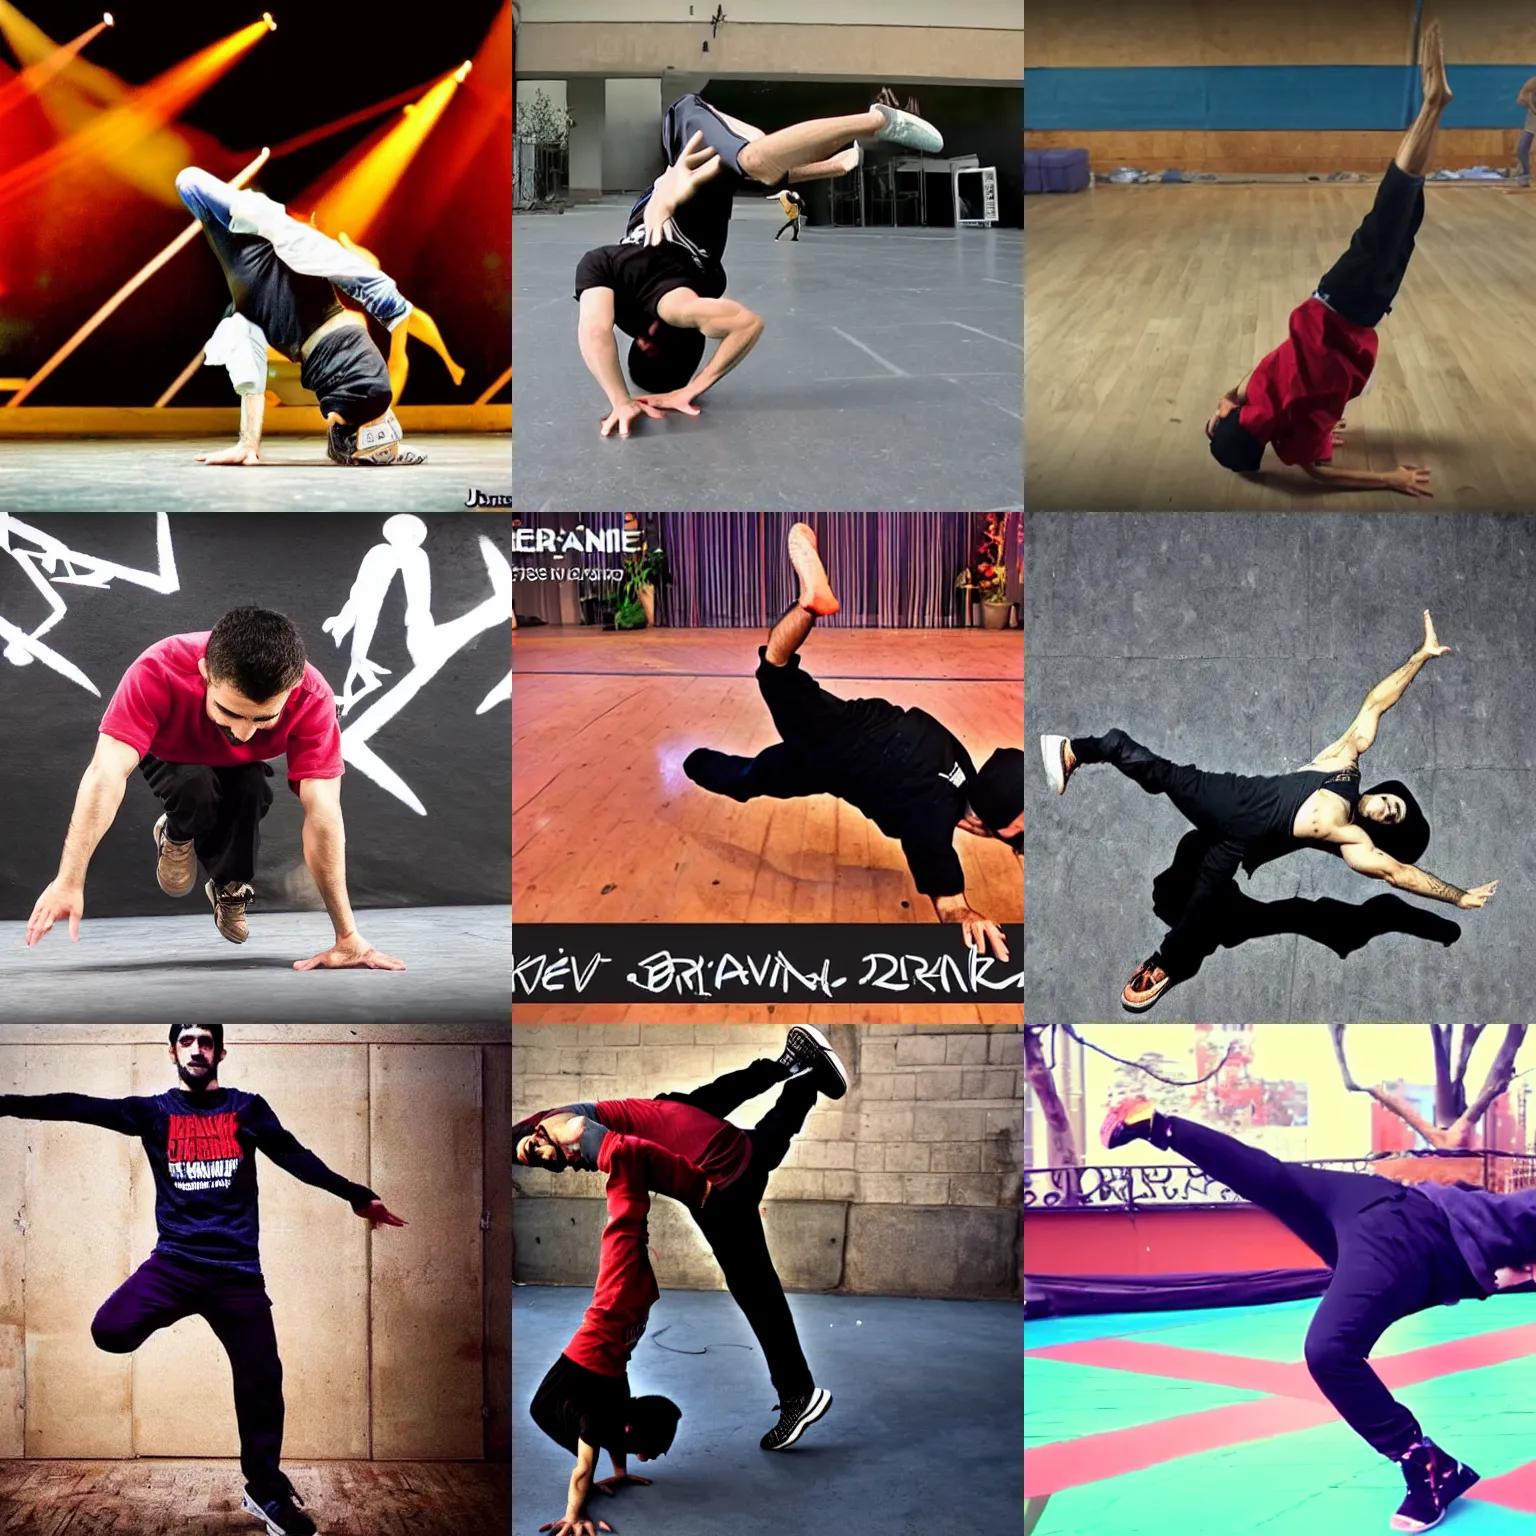 Prompt: breakdancer gev manoukian - break dancing, joga a break dance, breakdancing skills